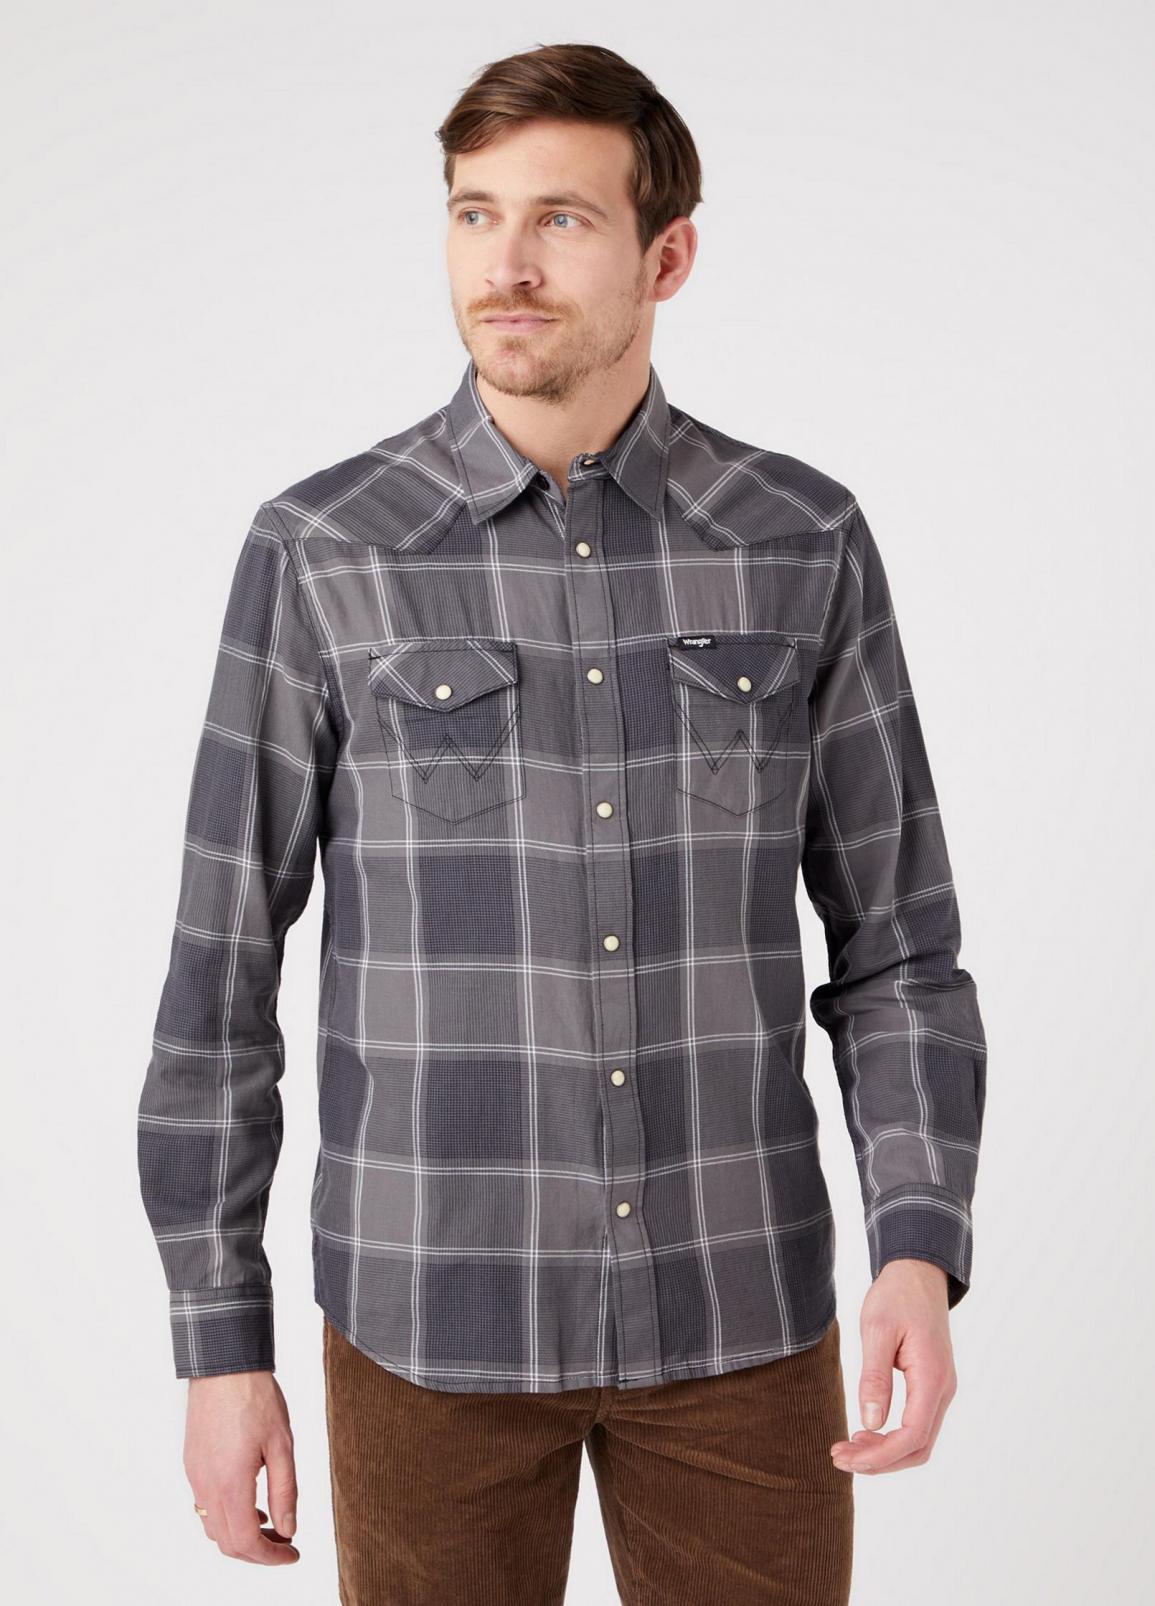 Wrangler® Western Shirt - Black Check